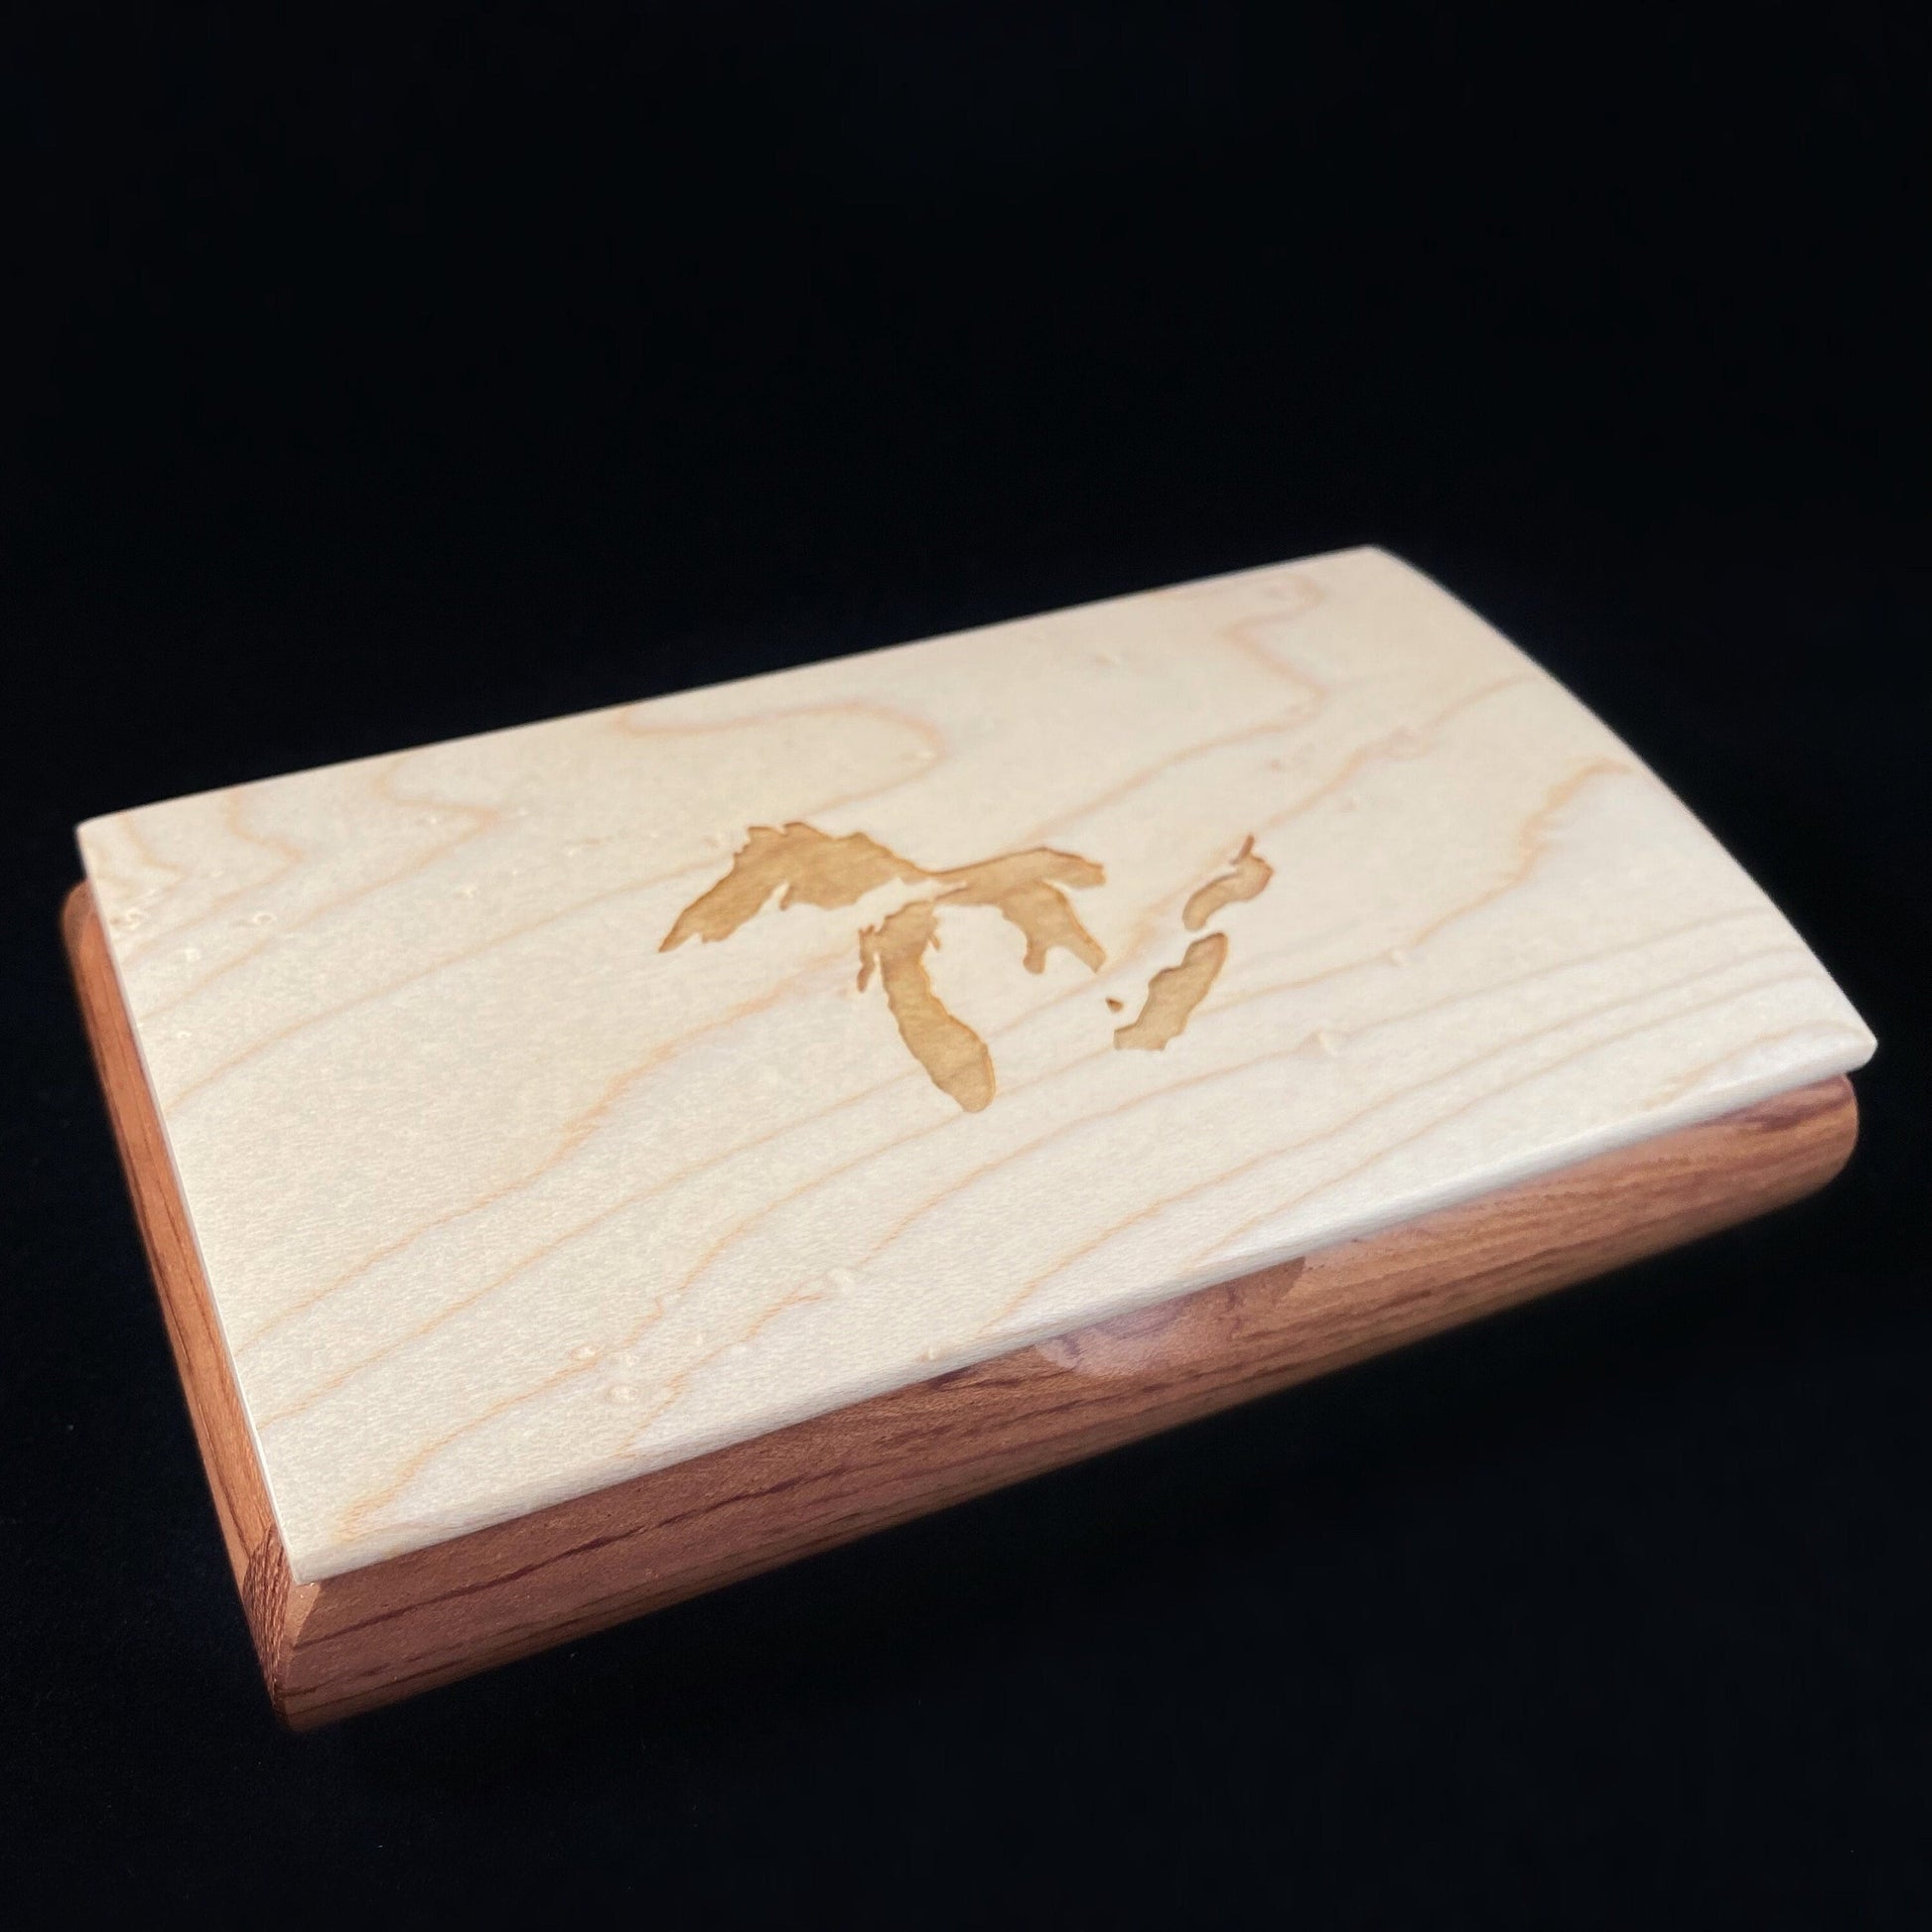 Great Lakes Handmade Wooden Box - Birdseye Maple and Bubinga